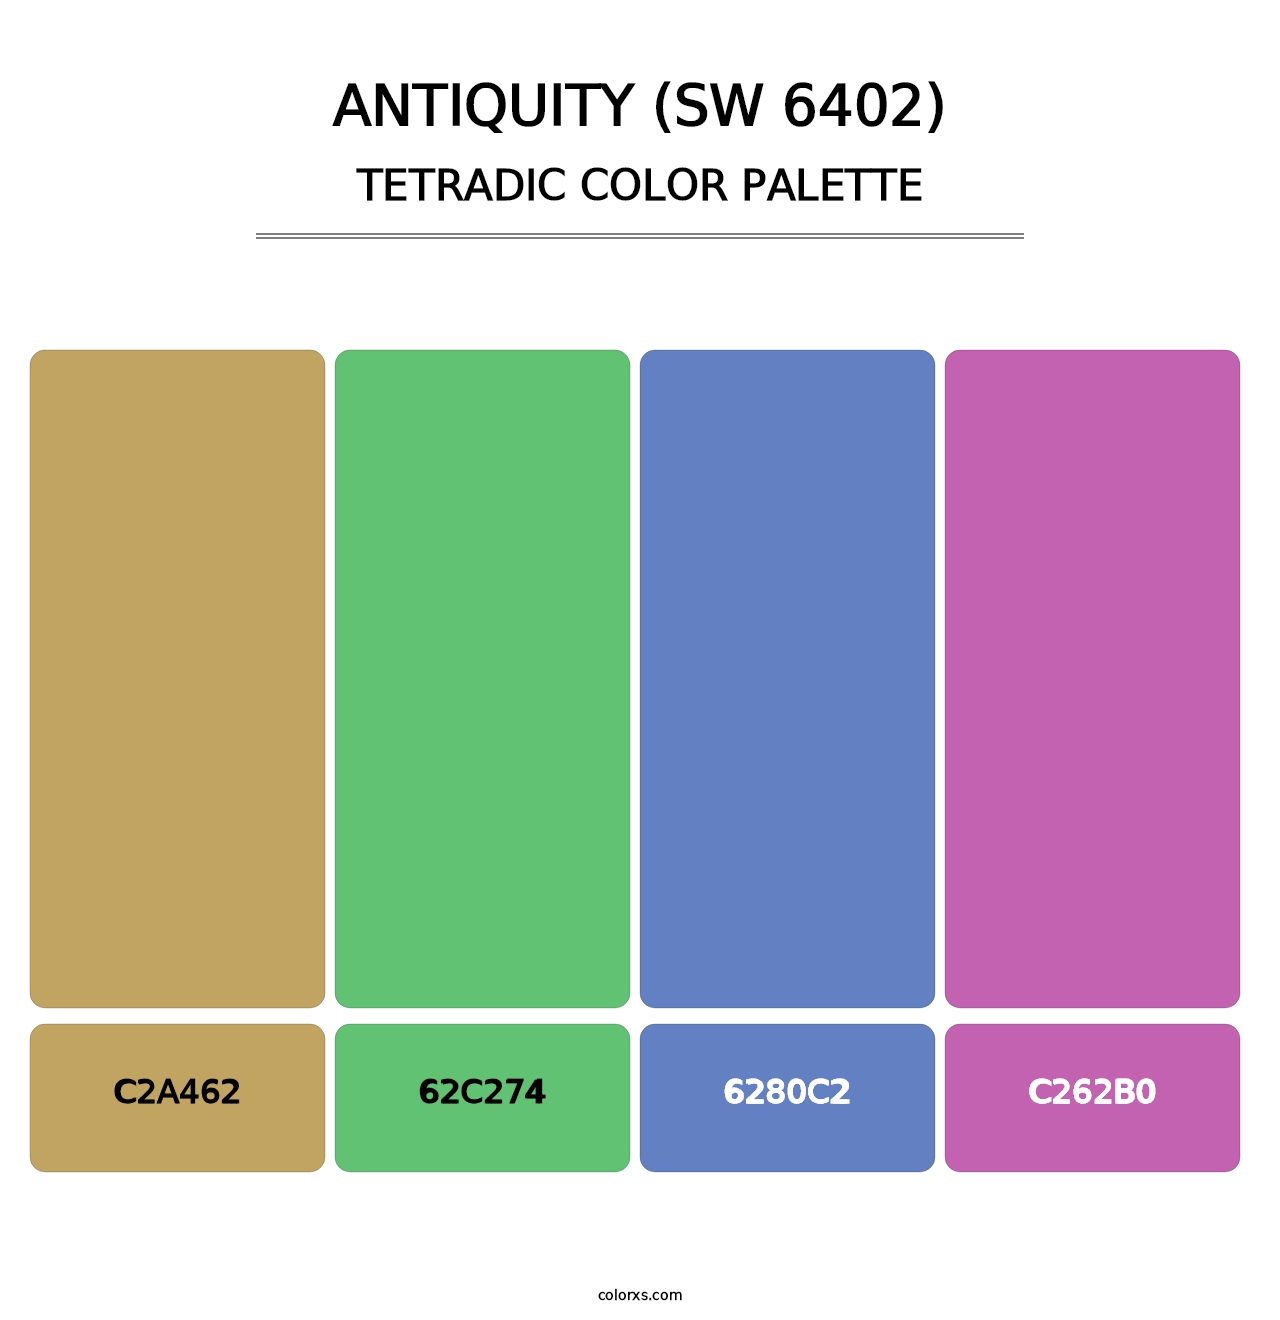 Antiquity (SW 6402) - Tetradic Color Palette